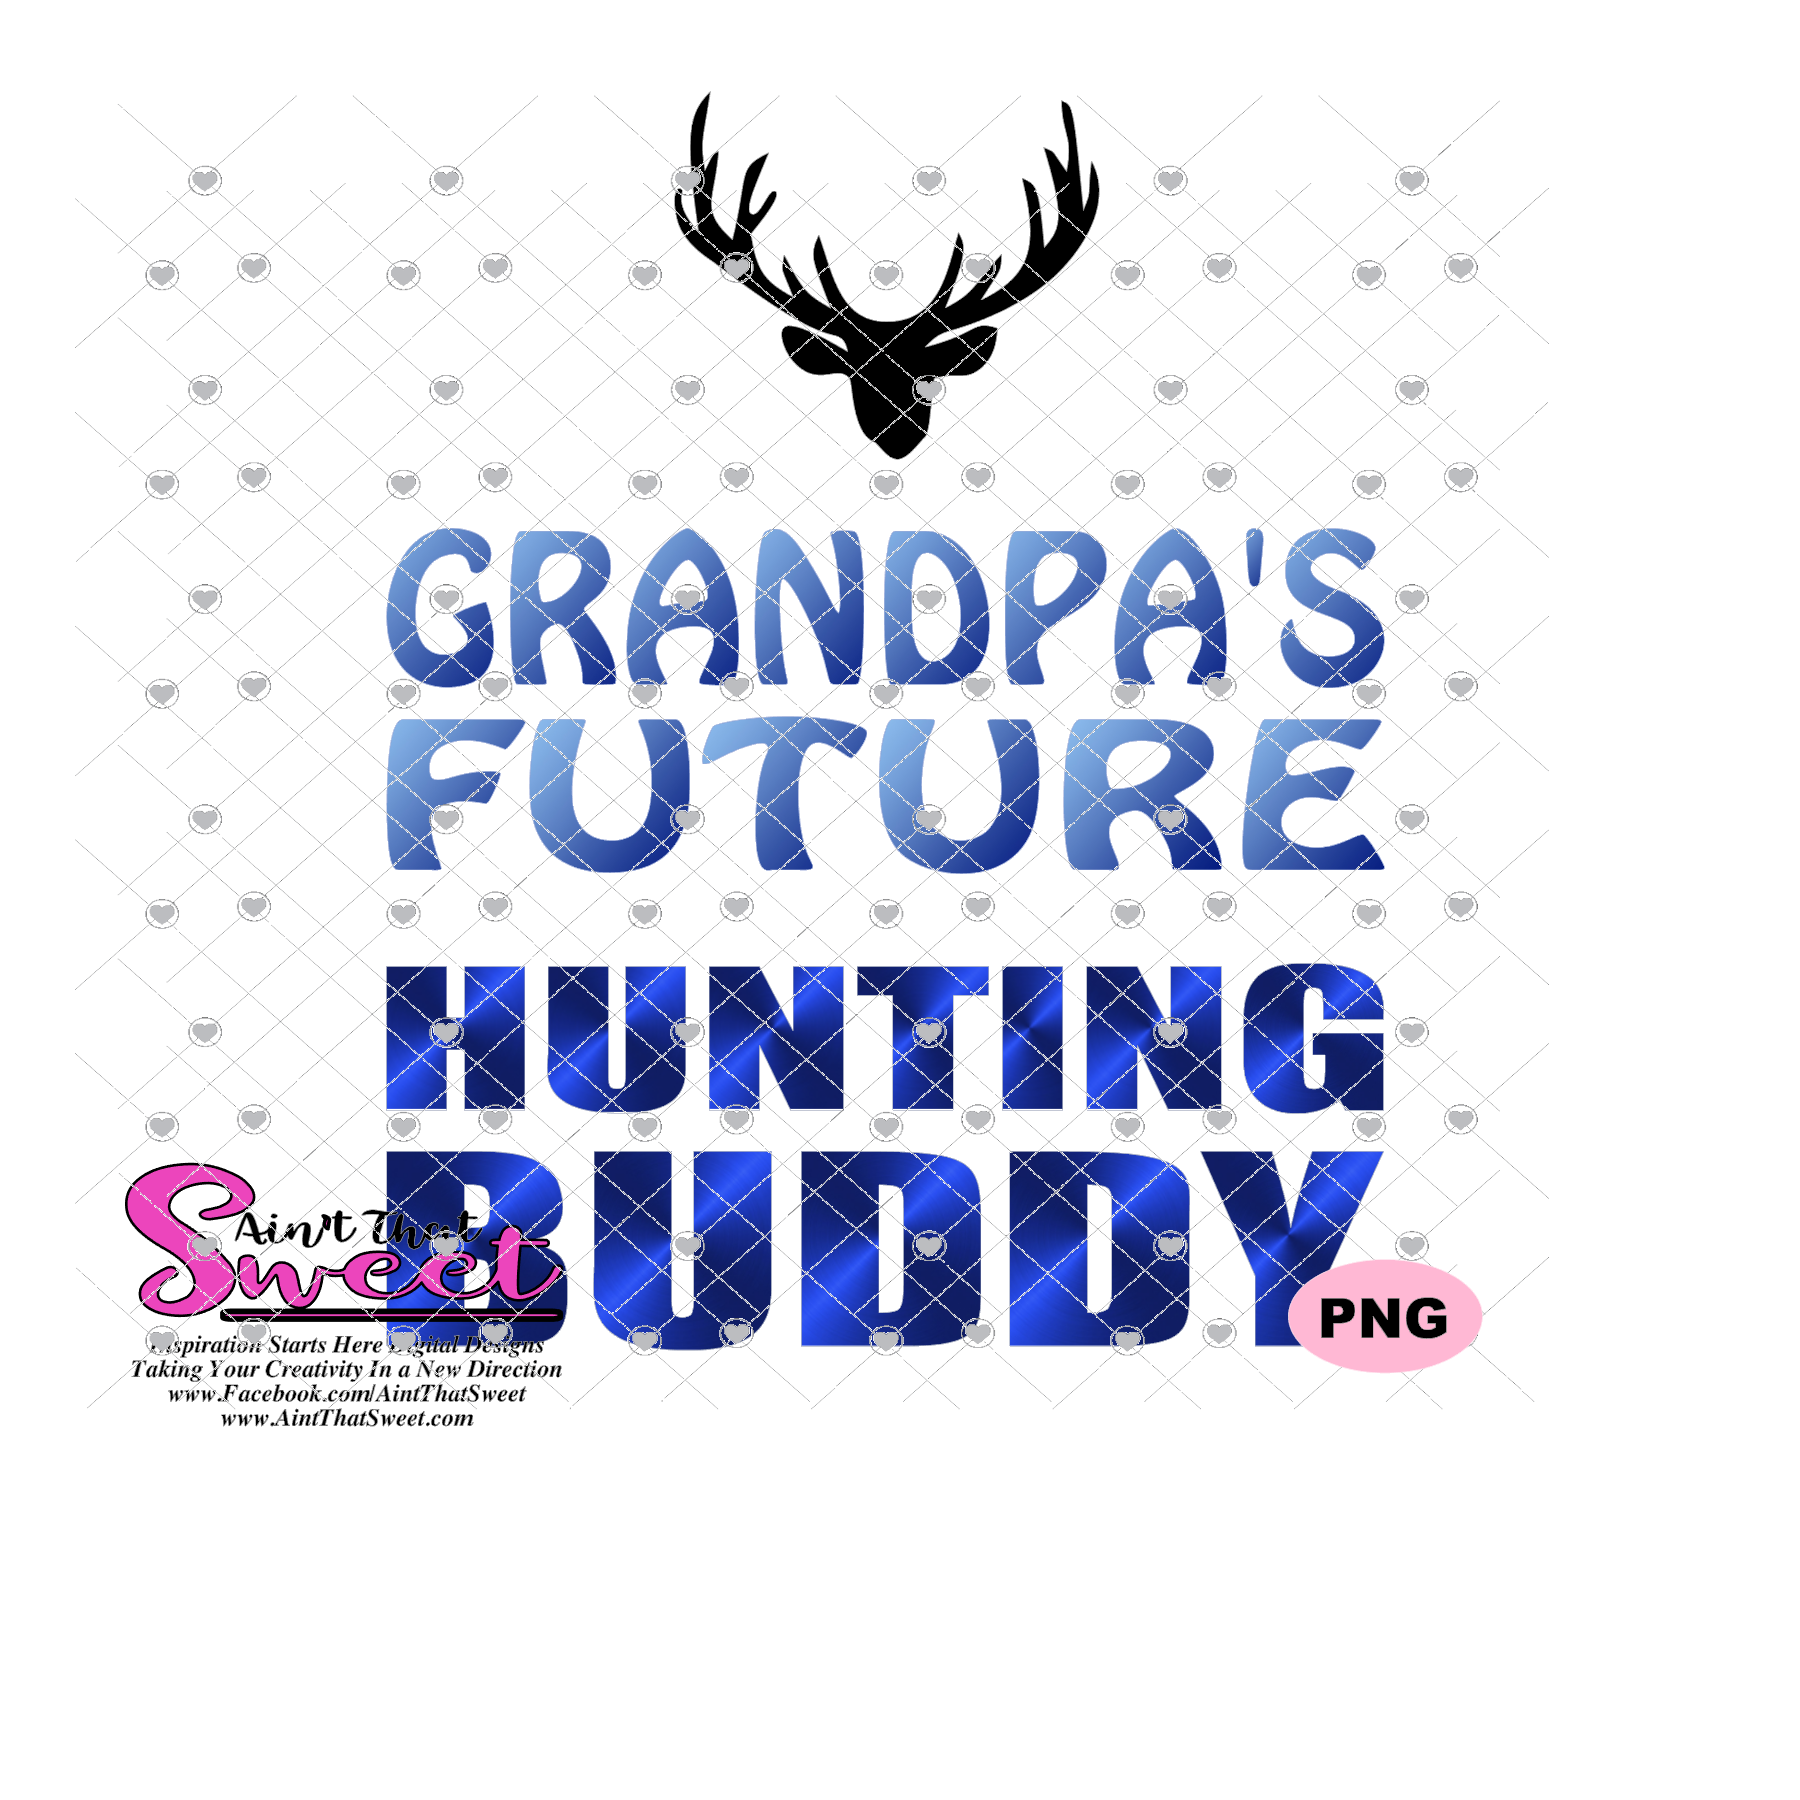 Download Grandpa's Future Hunting Buddy DeerHead - Transparent PNG ...